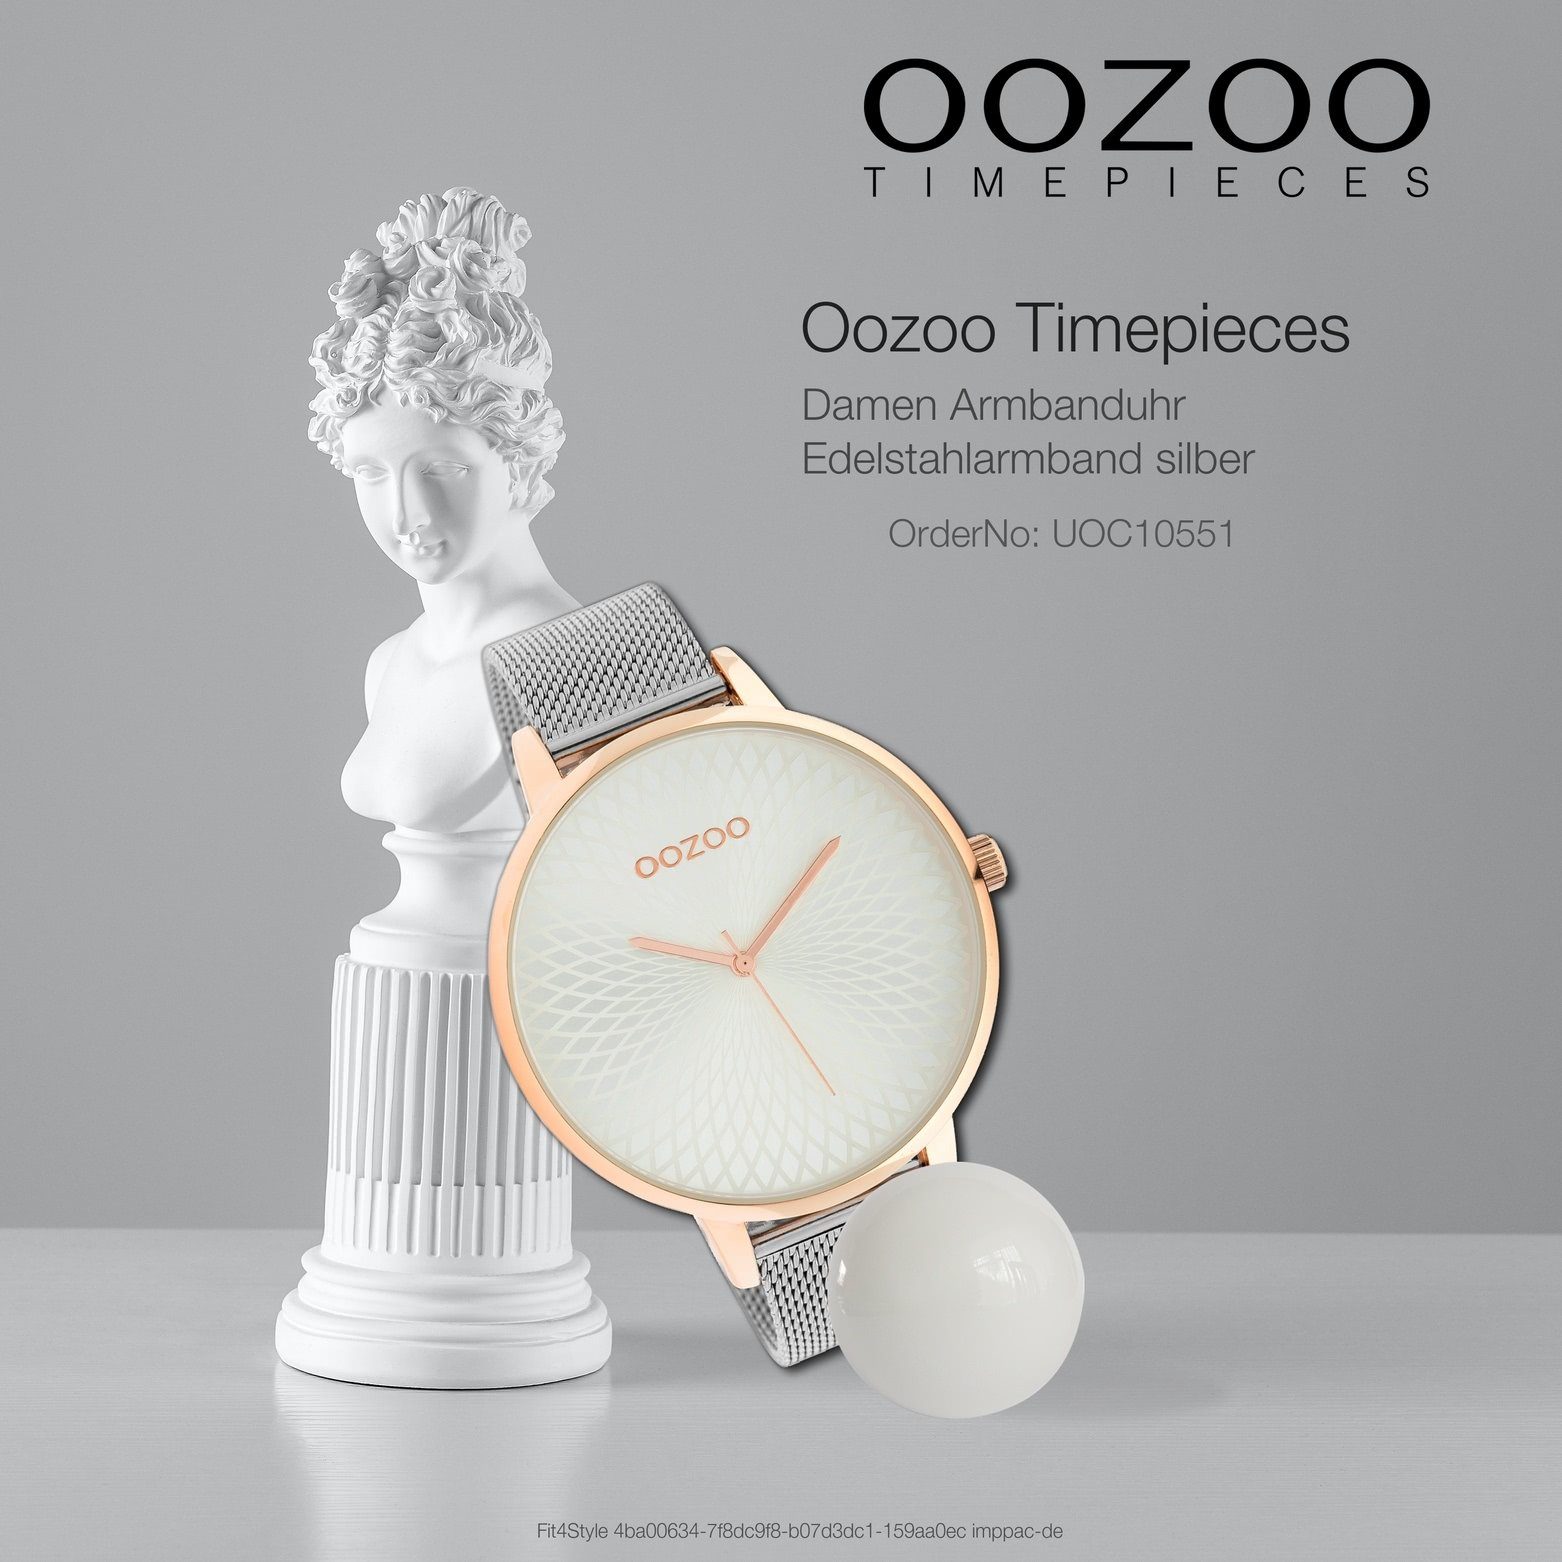 rund, Damenuhr Quarzuhr Fashion-Style silber (ca. Damen extra Analog, OOZOO Edelstahlarmband, Armbanduhr groß 48mm) Oozoo